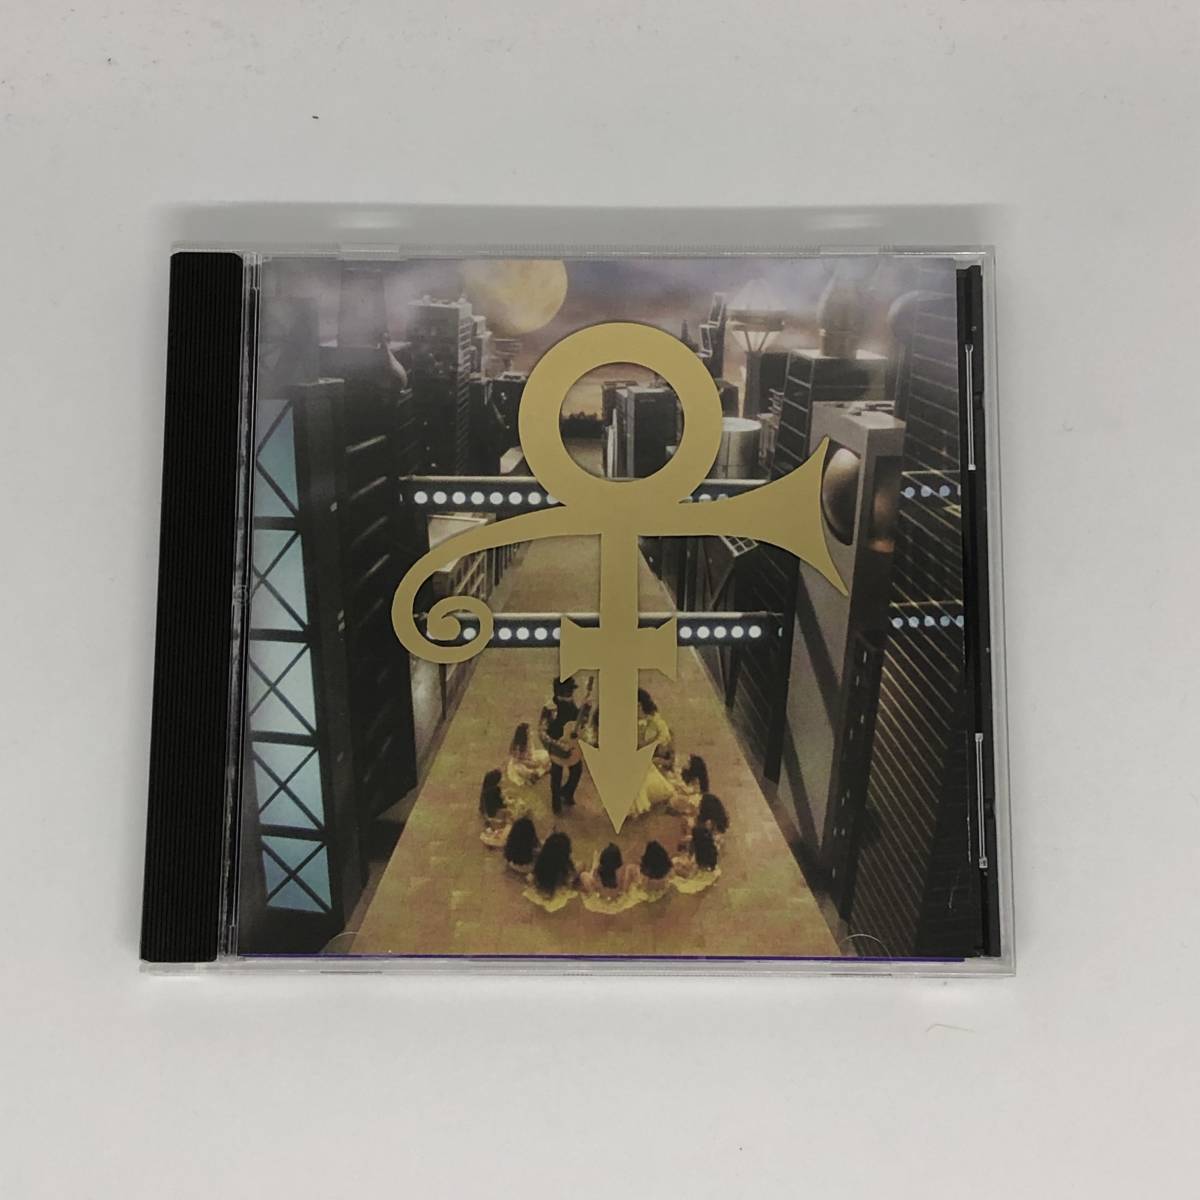 US盤 中古CD Prince And The N.P.G. Love Symbol Clean Ver. 日本未発売 プリンス ラブ・シンボル Paisley Park 9 45123-2 個人所有